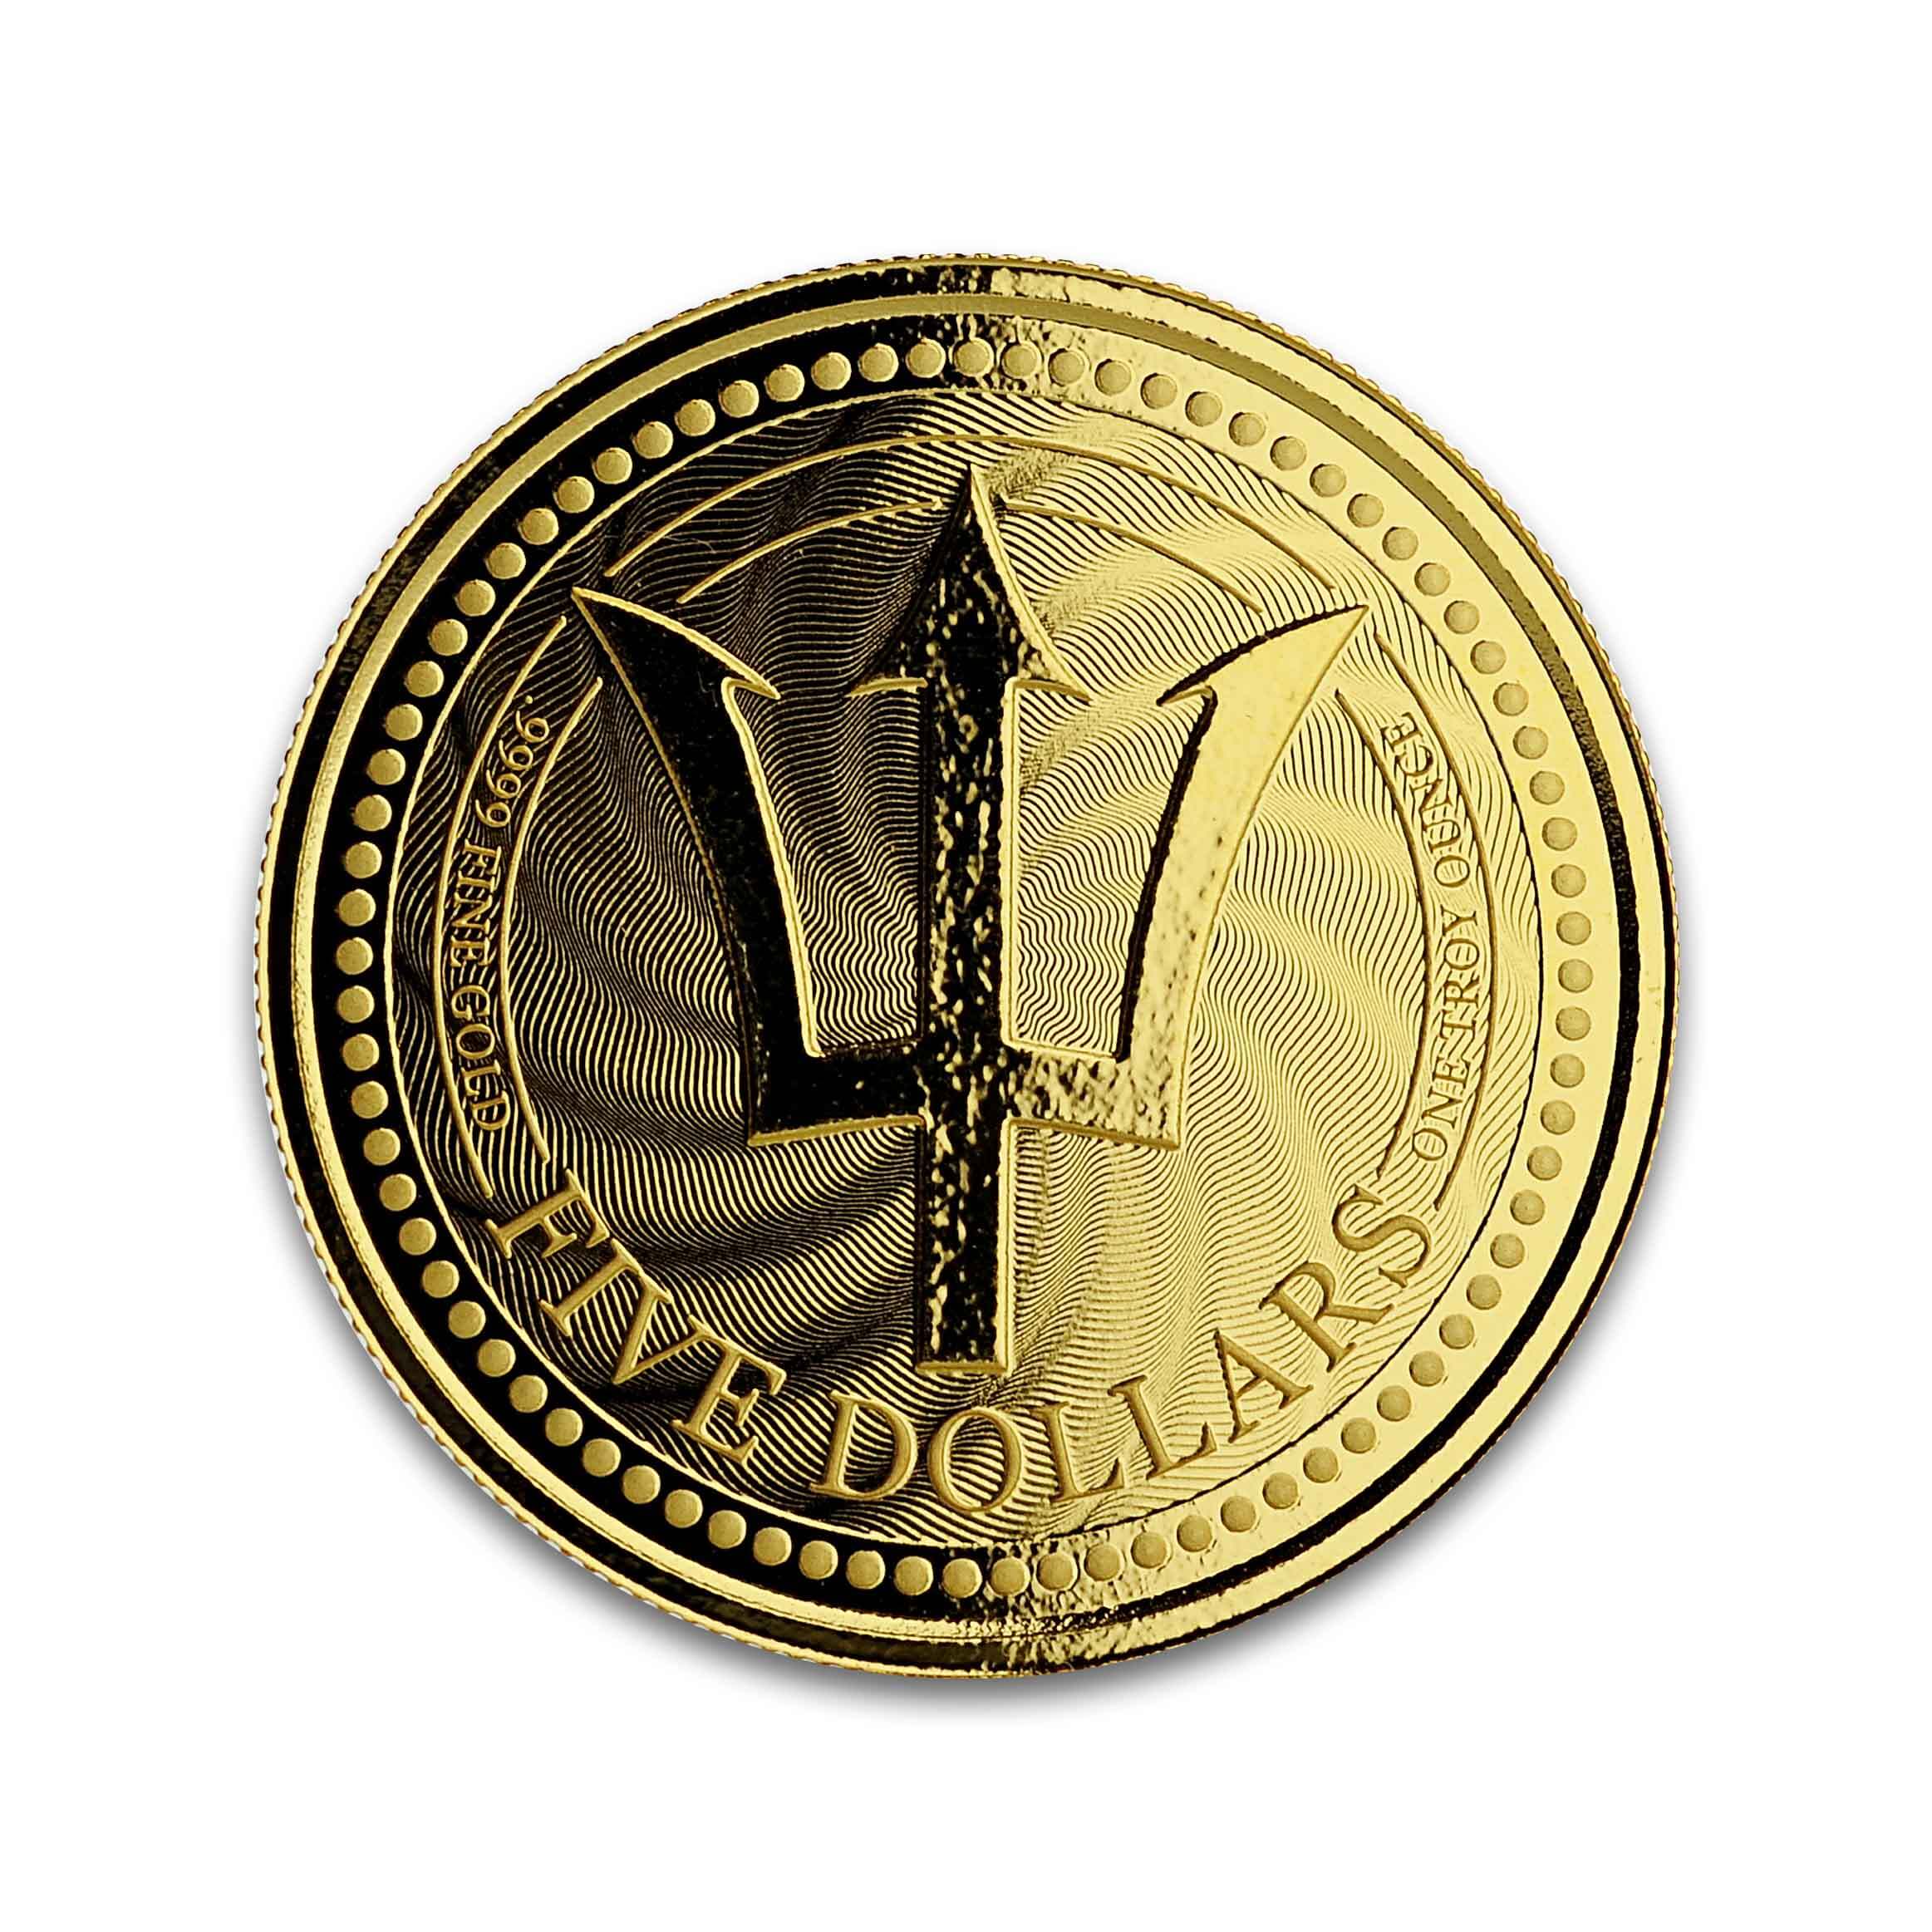 Trident 1 oz Silver Round Coin - bitcoinhelp.fun